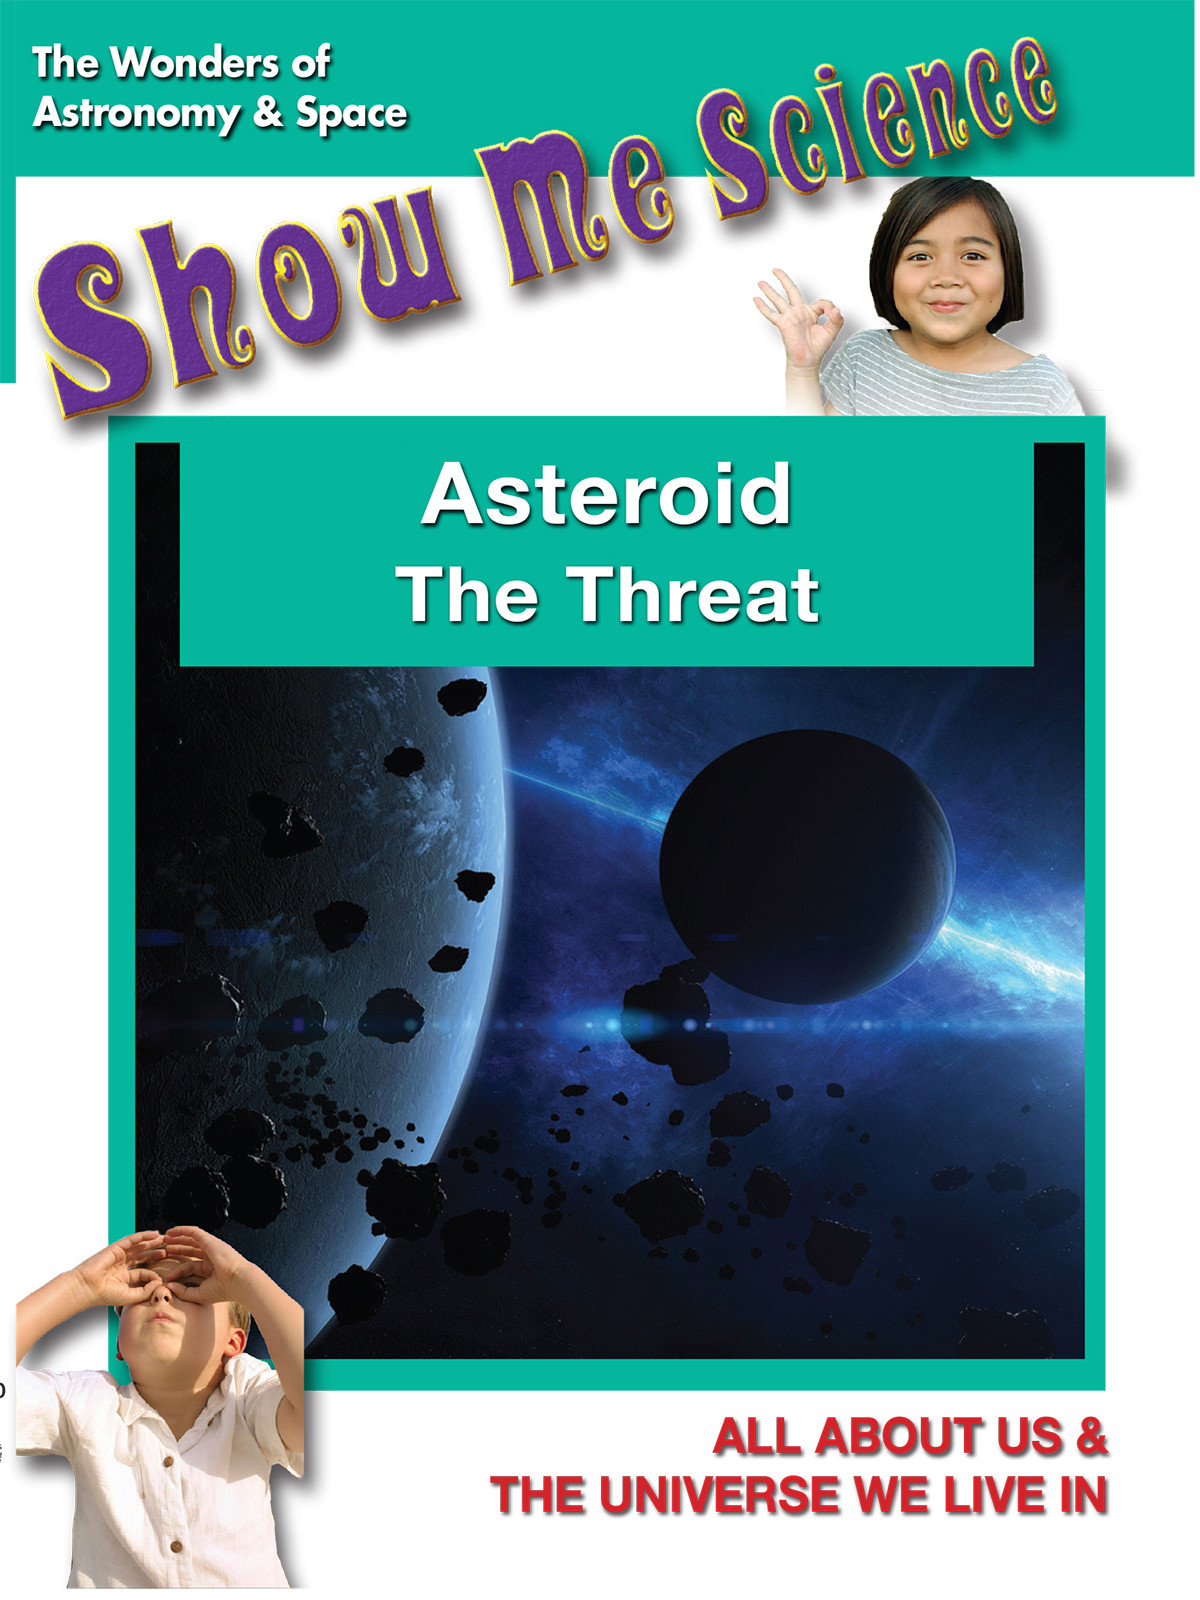 K4648 - Asteroid The Threat